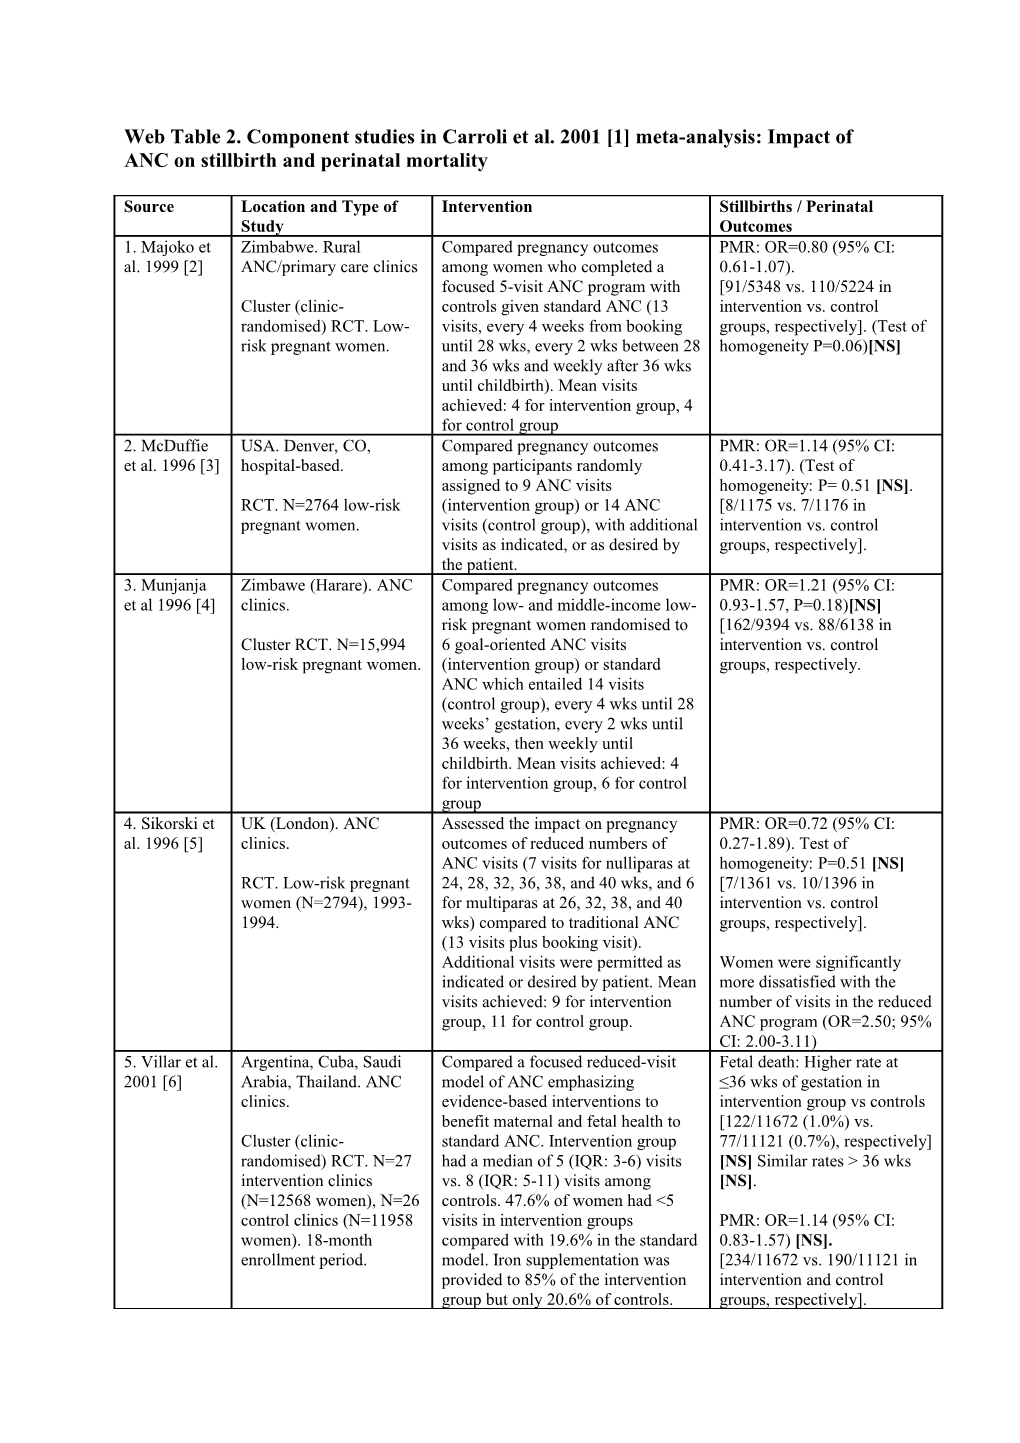 Web Table 2. Component Studies in Carroli Et Al. 2001 1 Meta-Analysis: Impact of ANC On